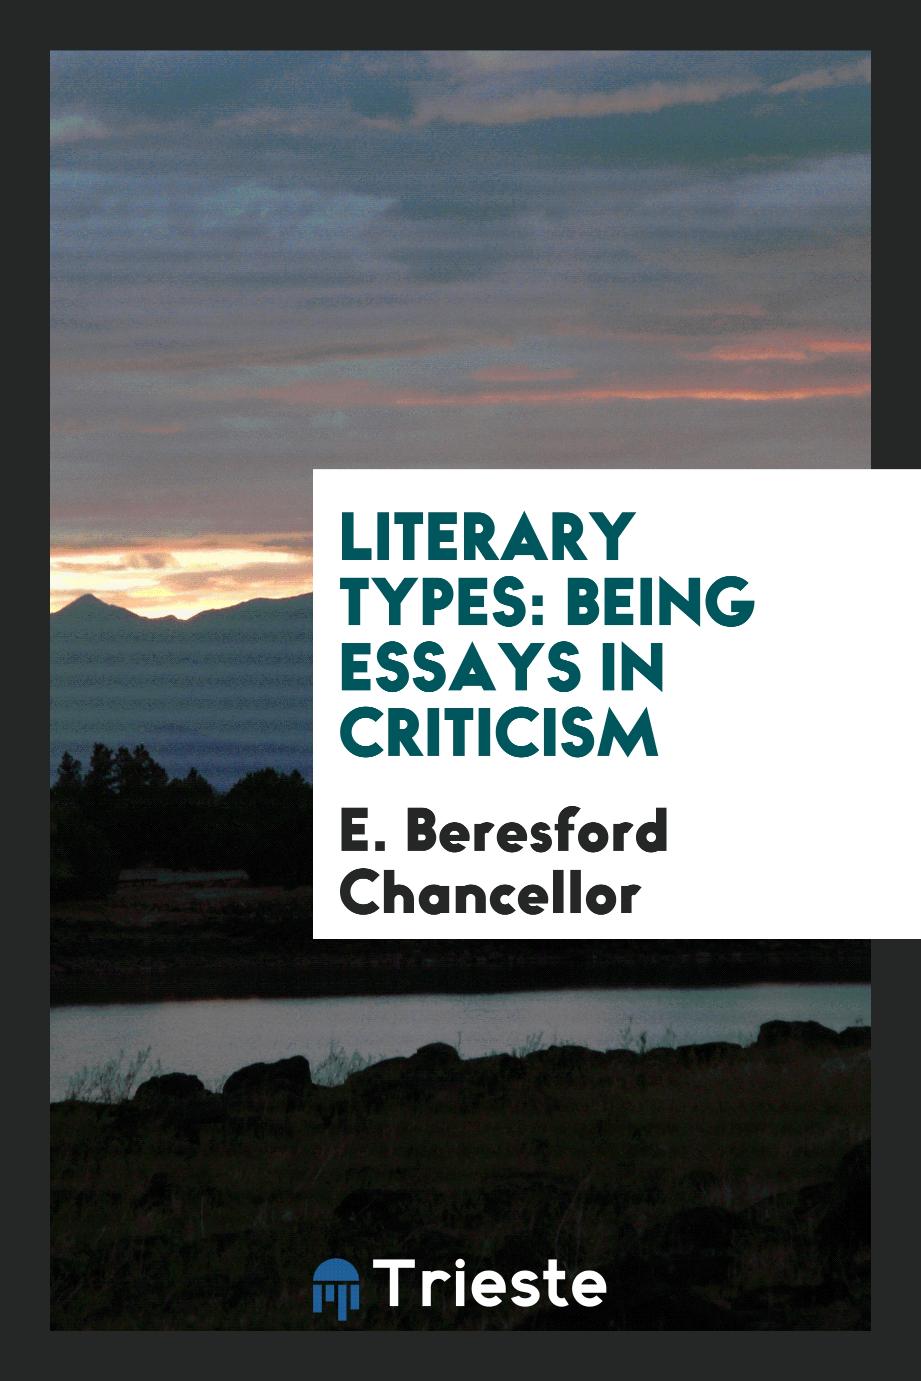 Literary types: being essays in criticism